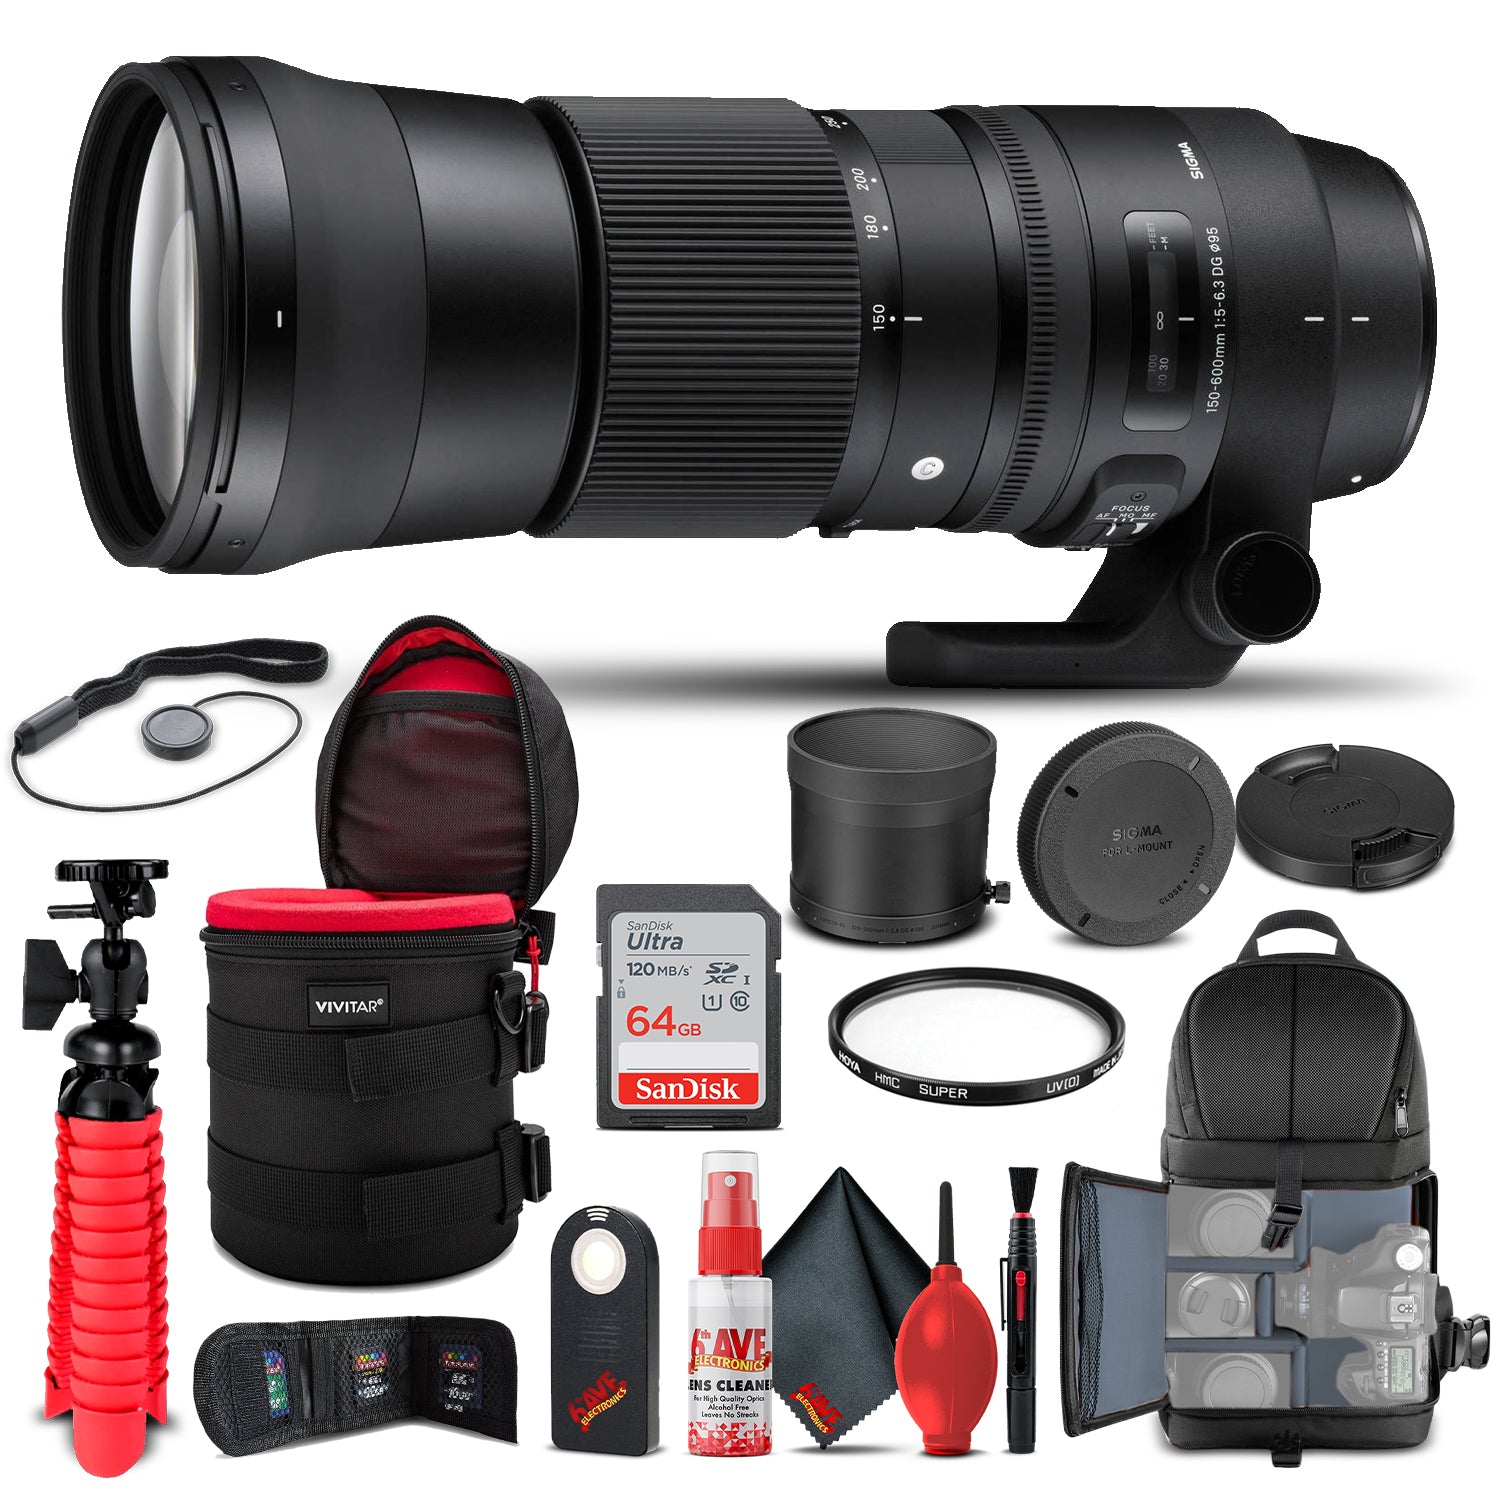 Sigma 150-600mm f/5-6.3 DG OS HSM Contemporary Lens for Canon EF (745-101) Bundle